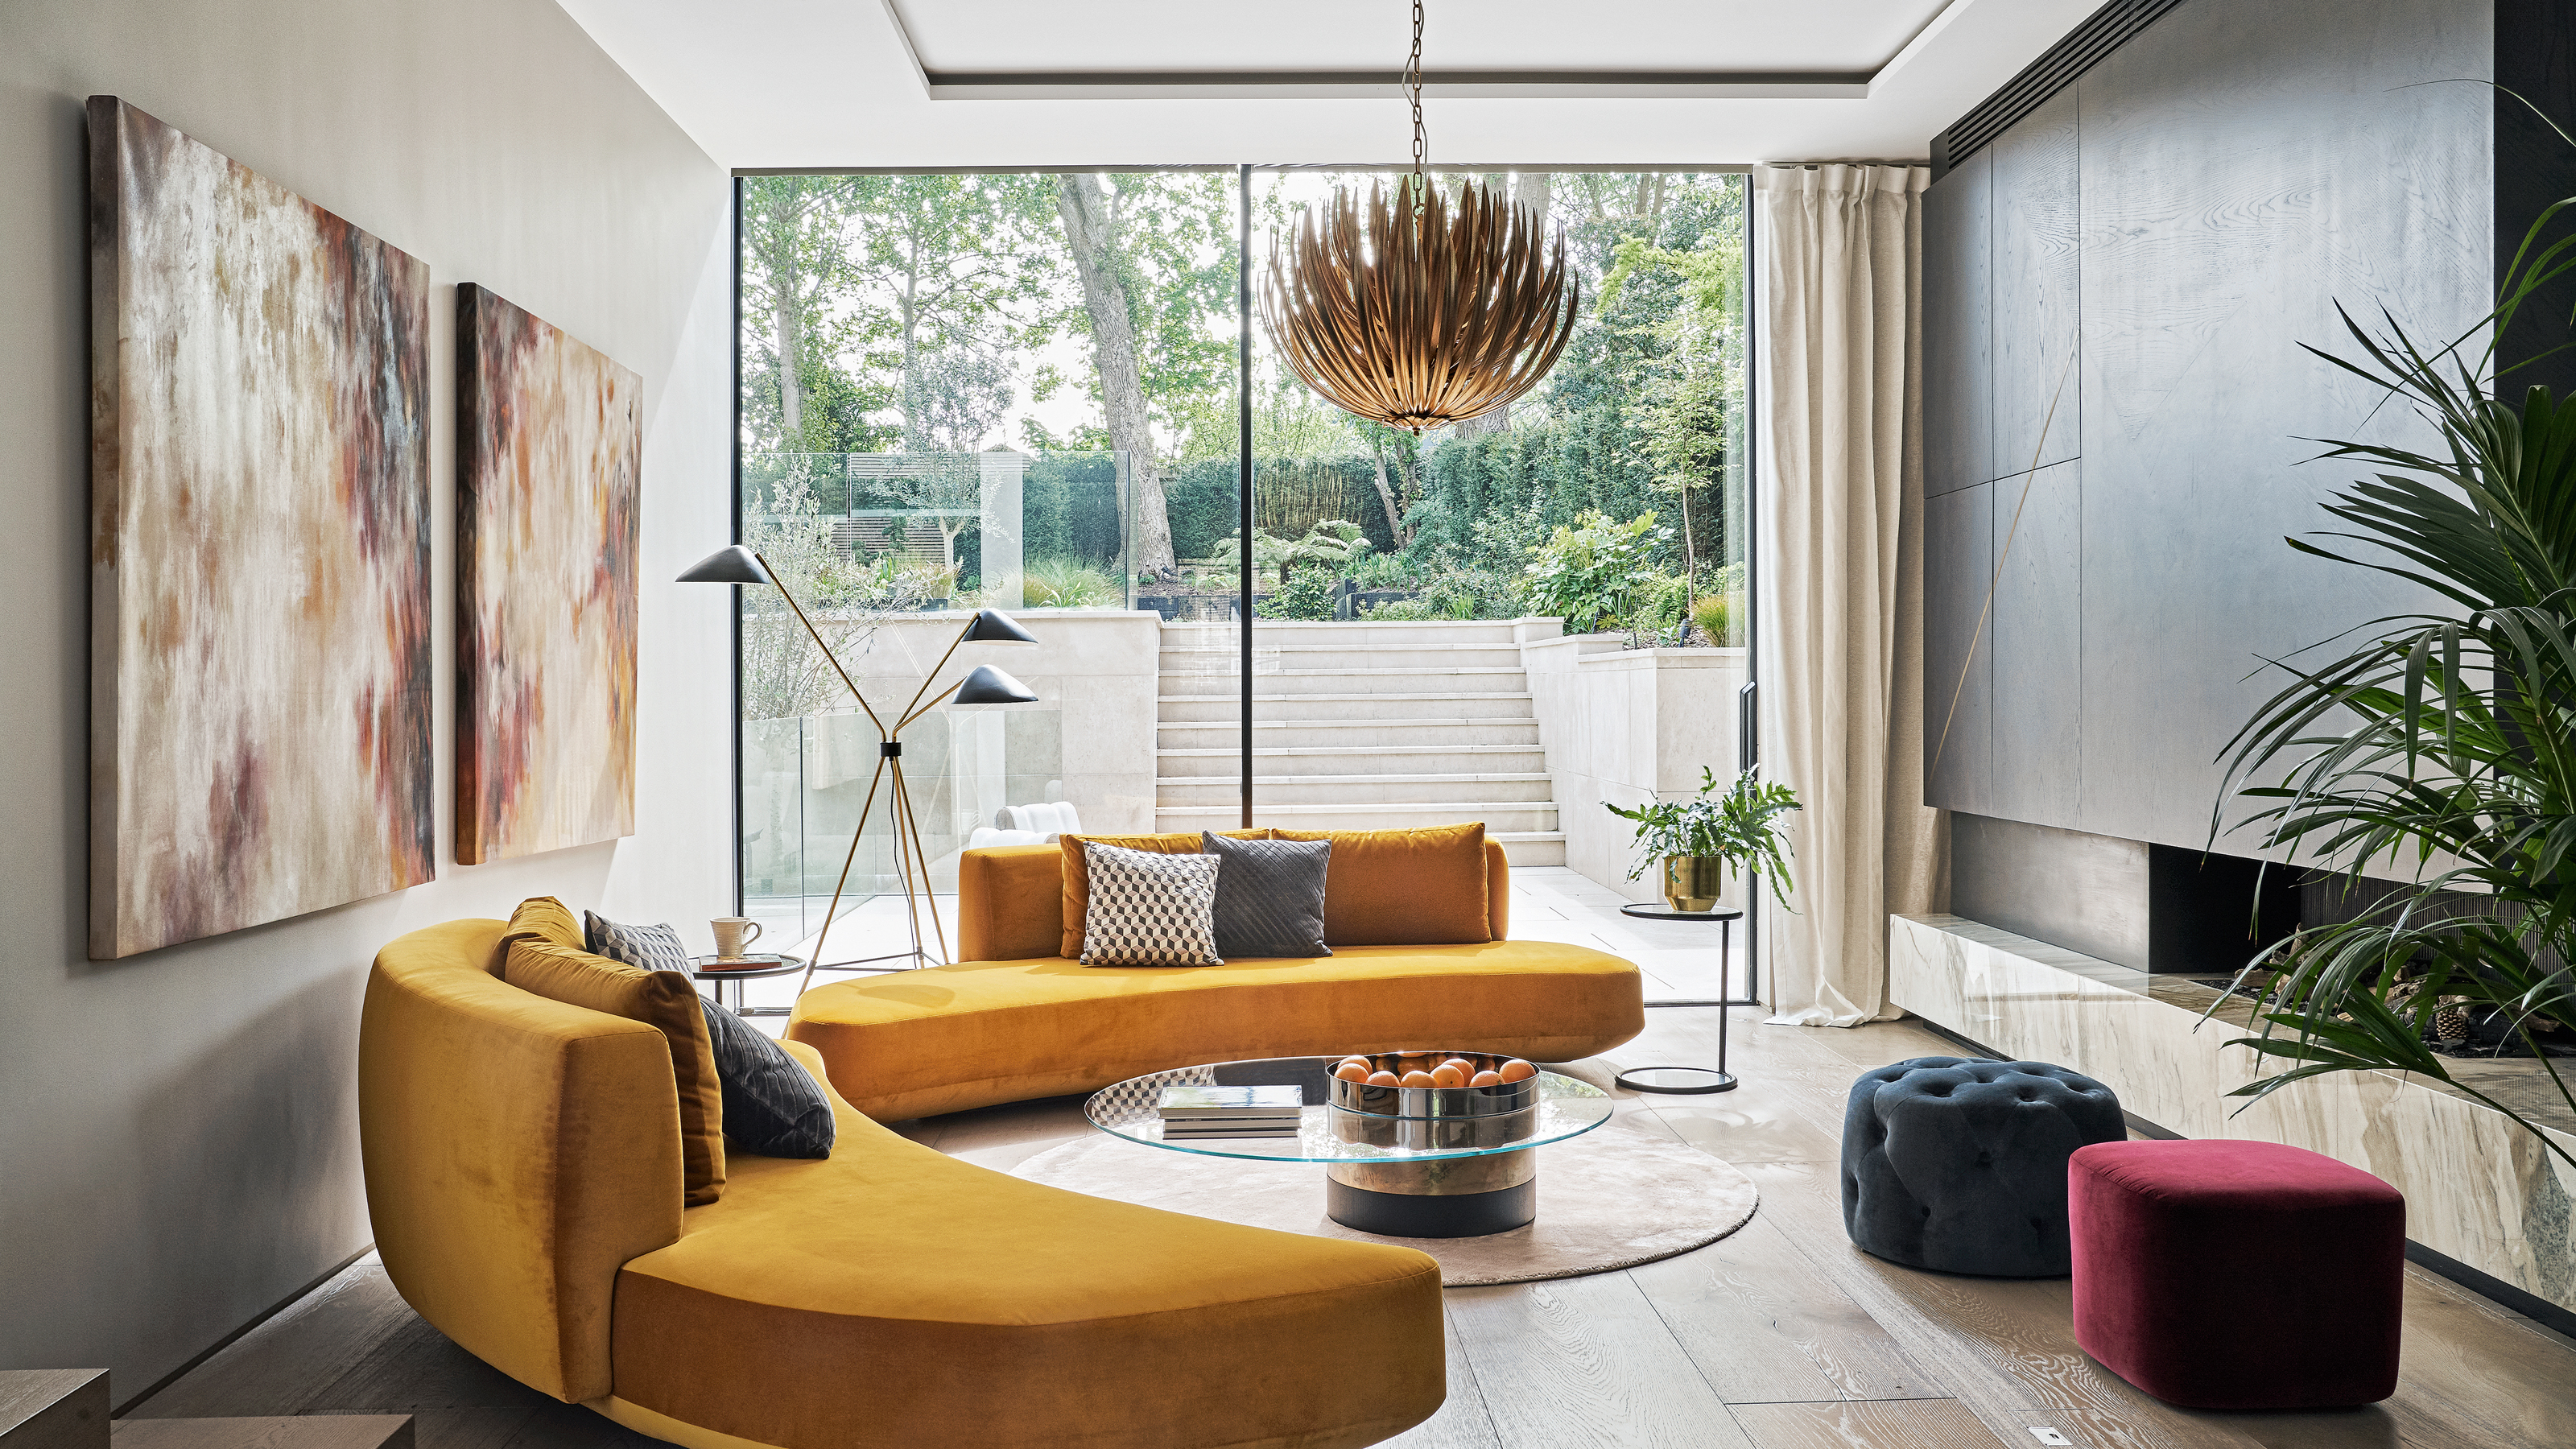 Top 5 Interior Design Trends Featuring Pendant Lights